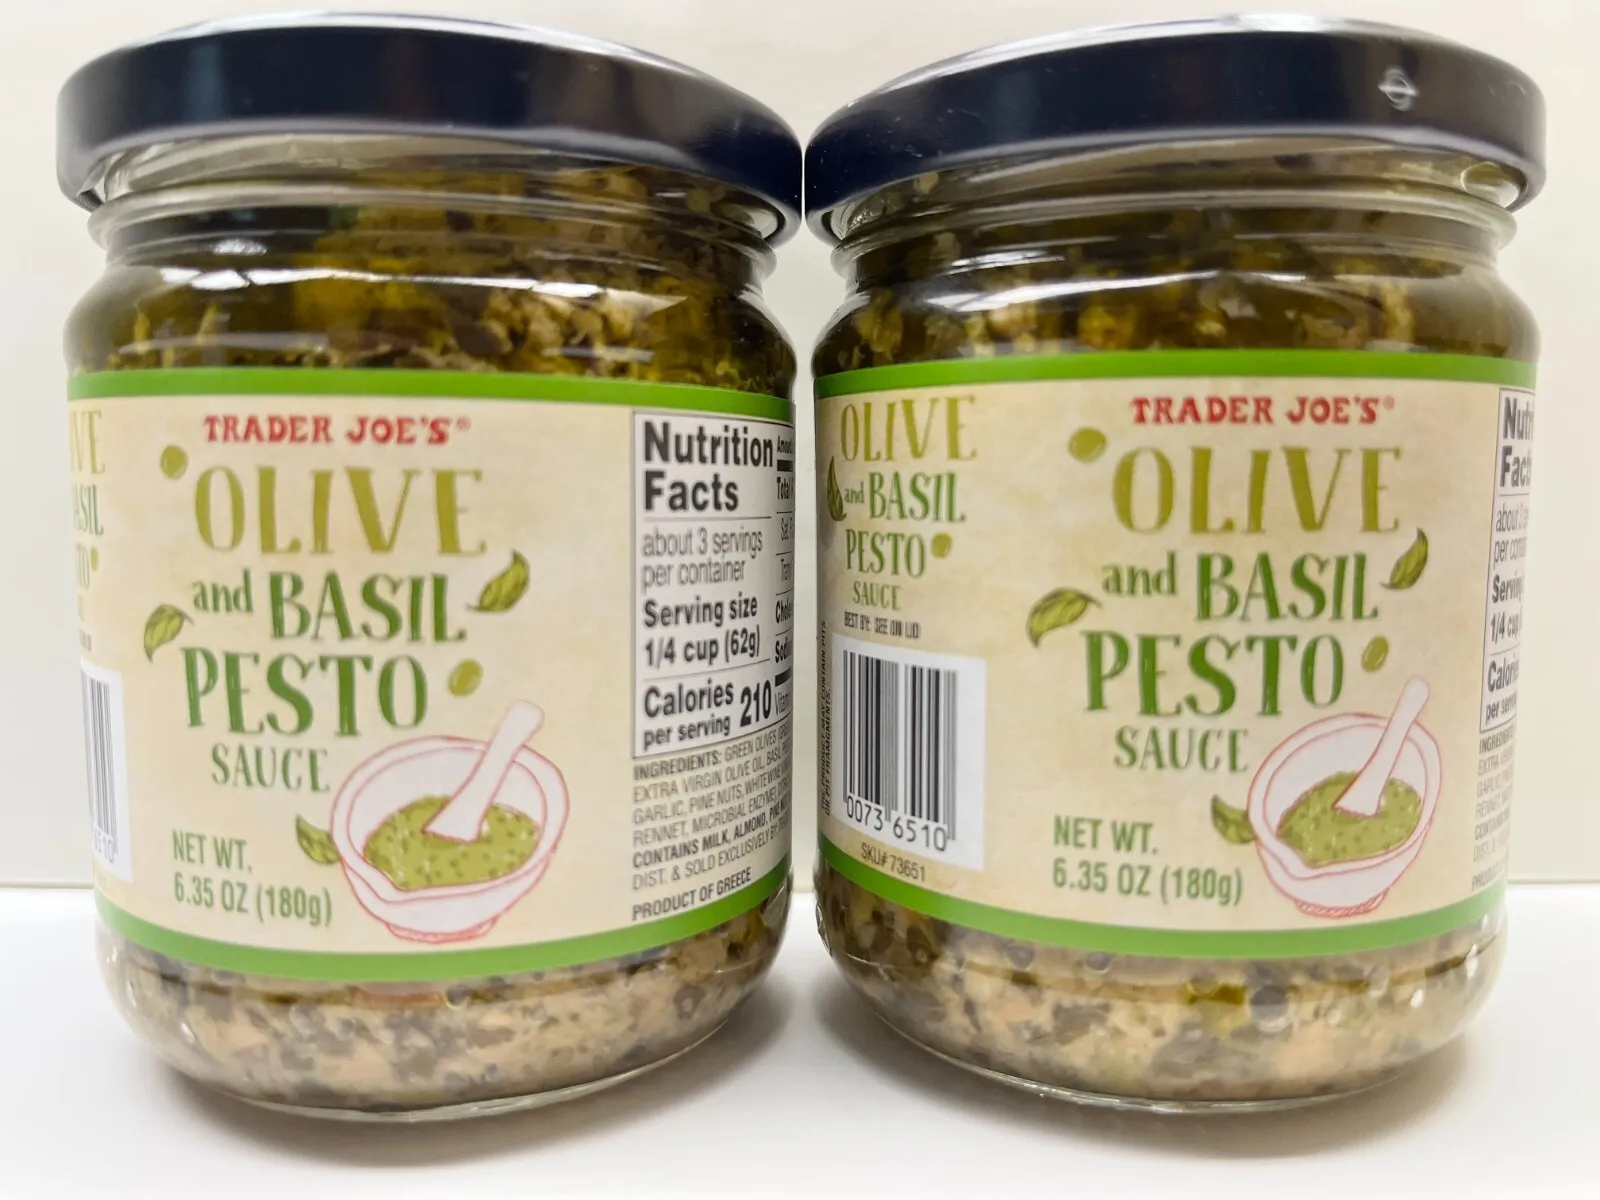 2 Bottles Trader Joe’s OLIVE and BASIL PESTO Pesto Sauce  6.35 OZ Each NEW ITEM